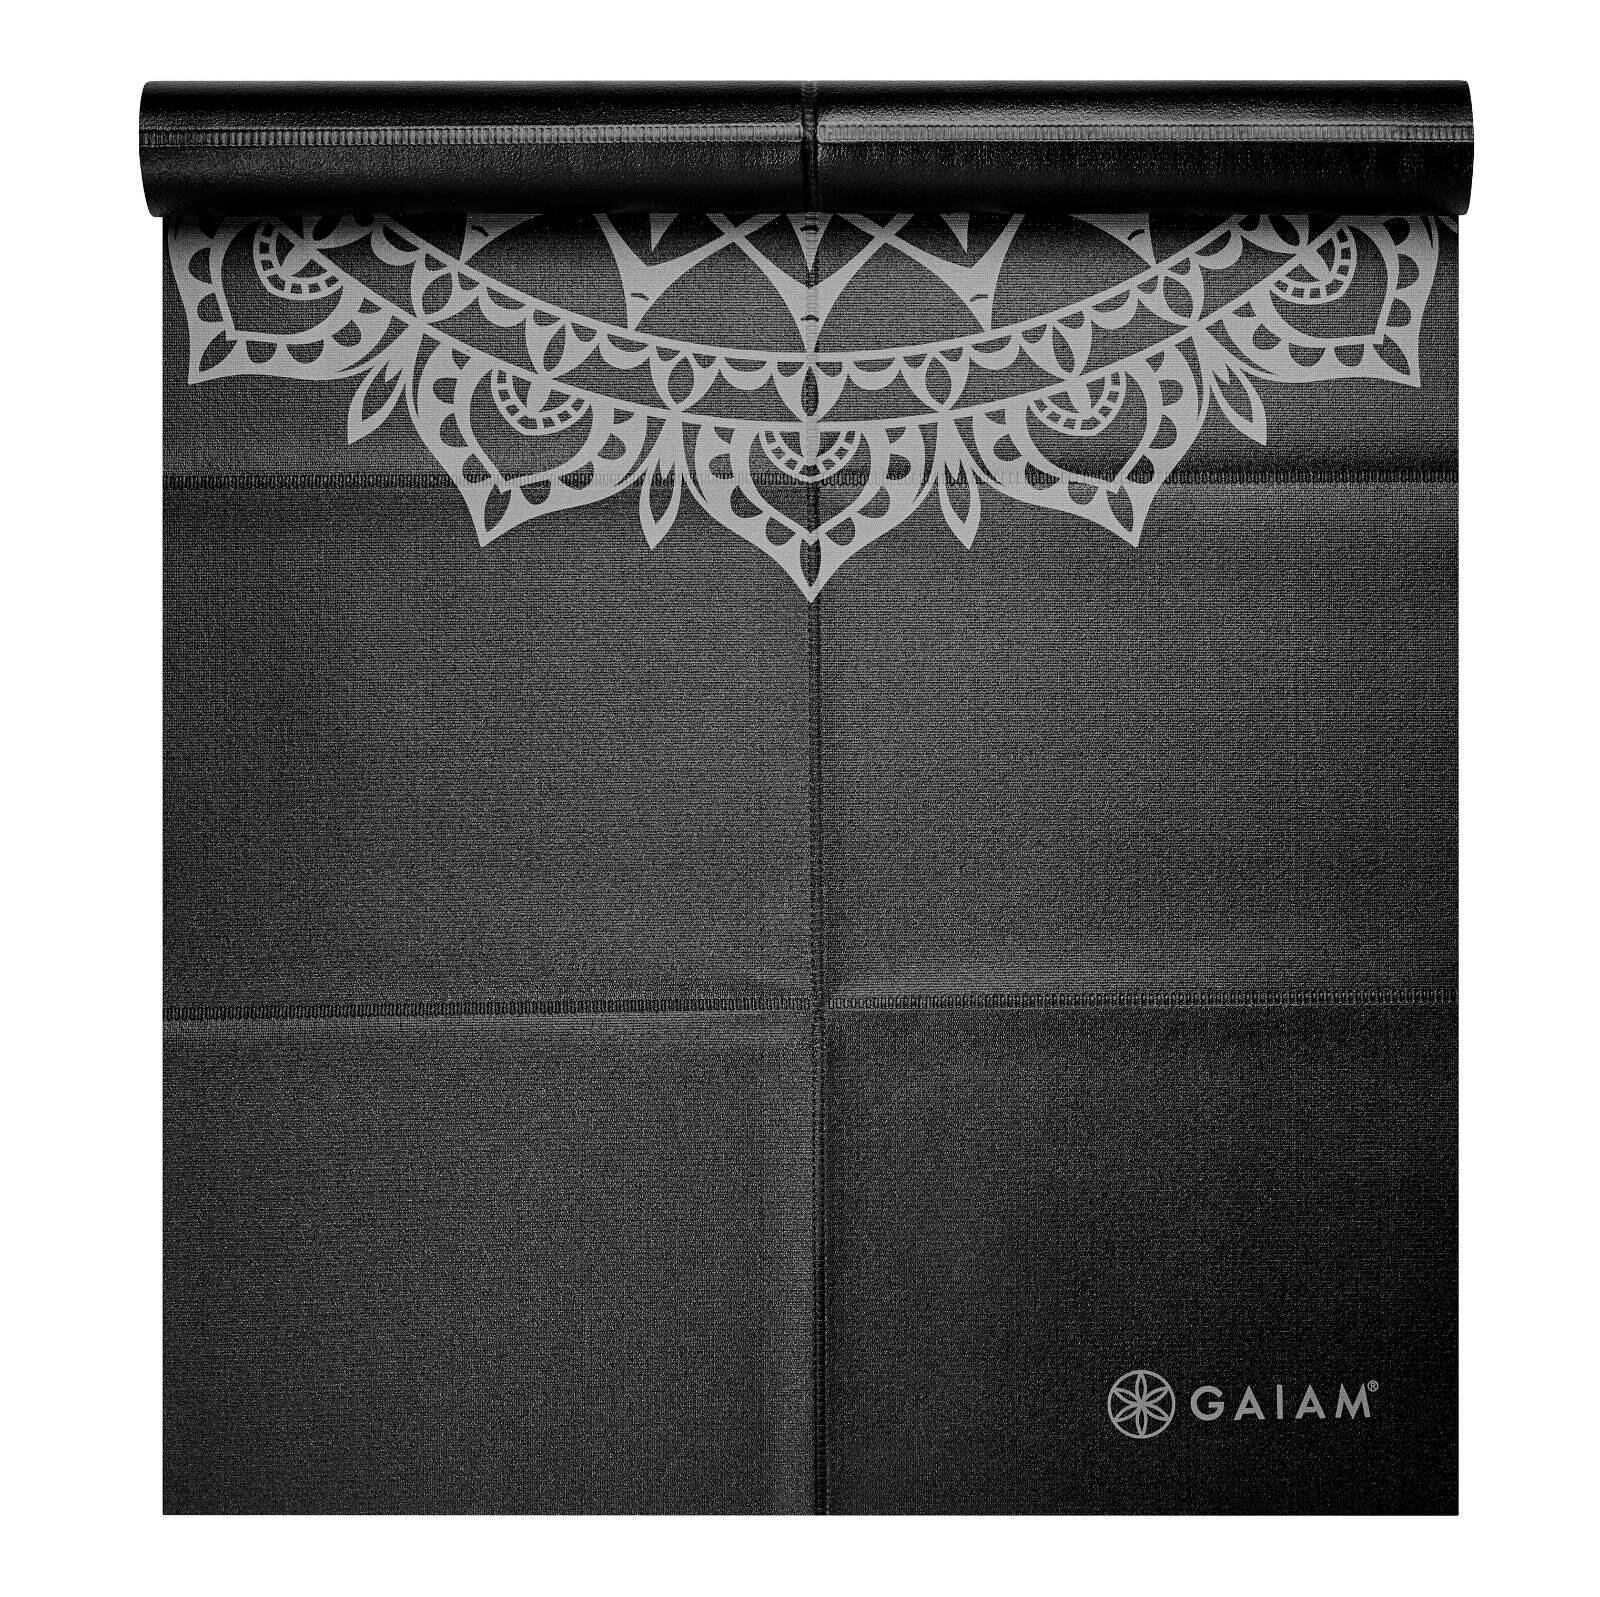 GAIAM Gaiam Foldable Yoga Mat 2mm - Midnight Marrakesh